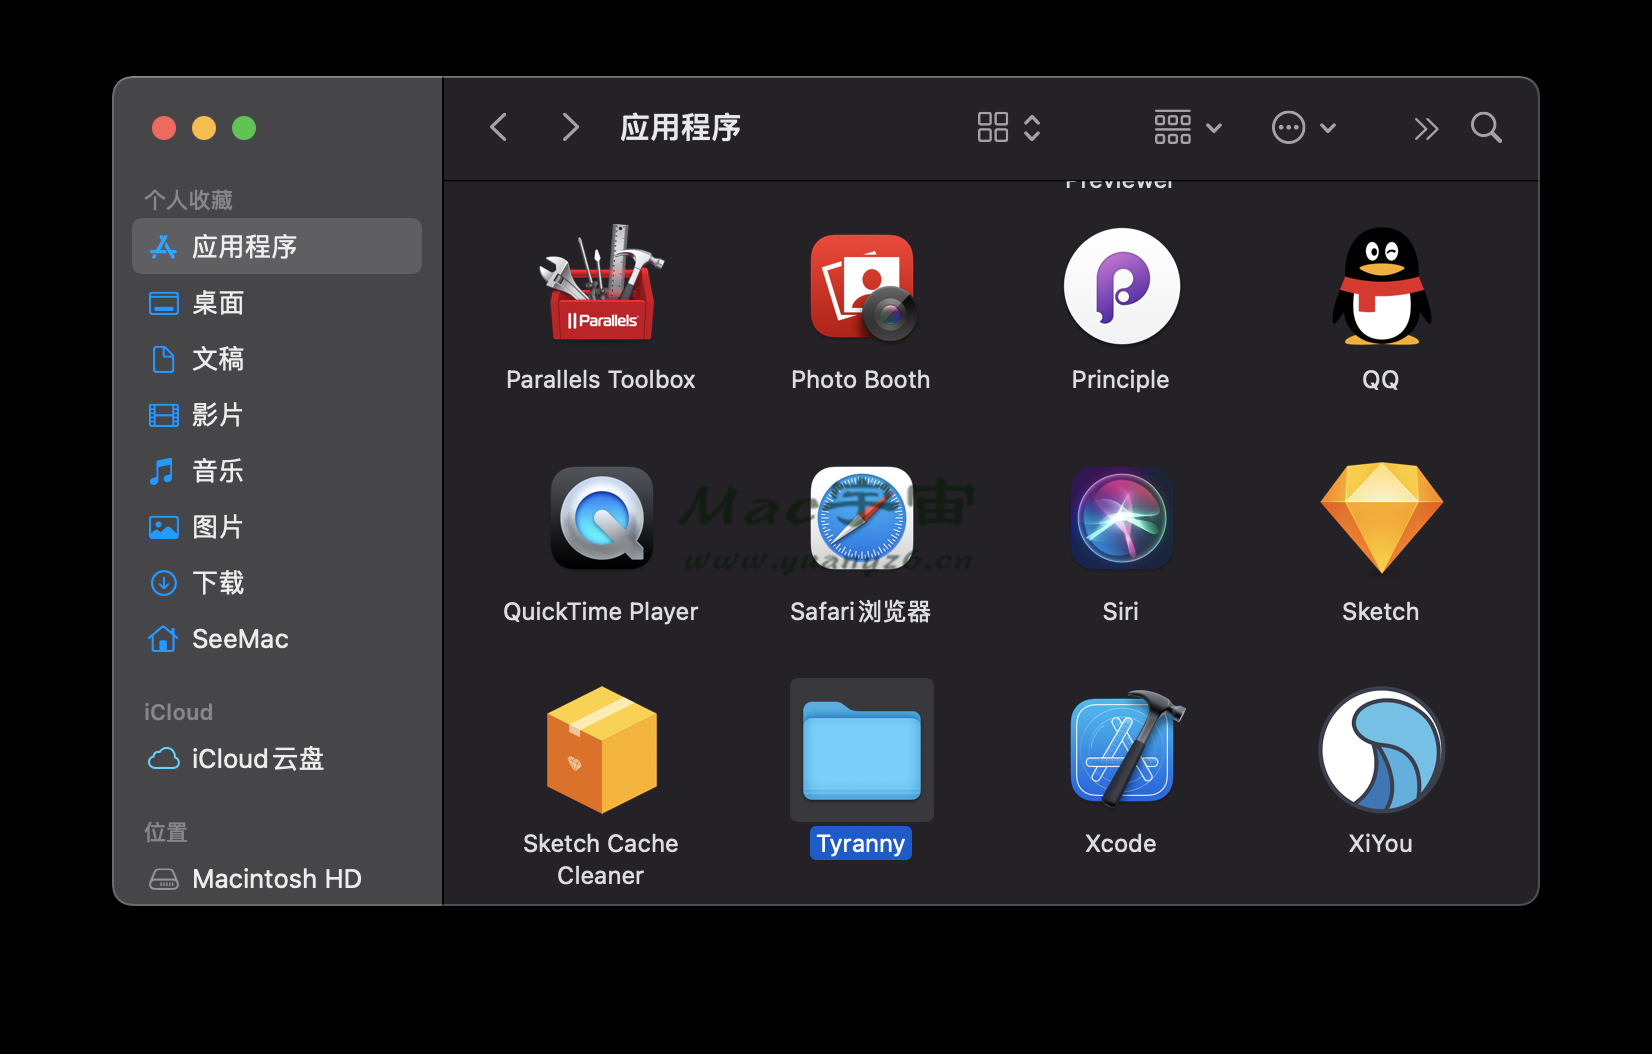 暴君 for Mac v1.2.1.160 中文设置教程 苹果电脑